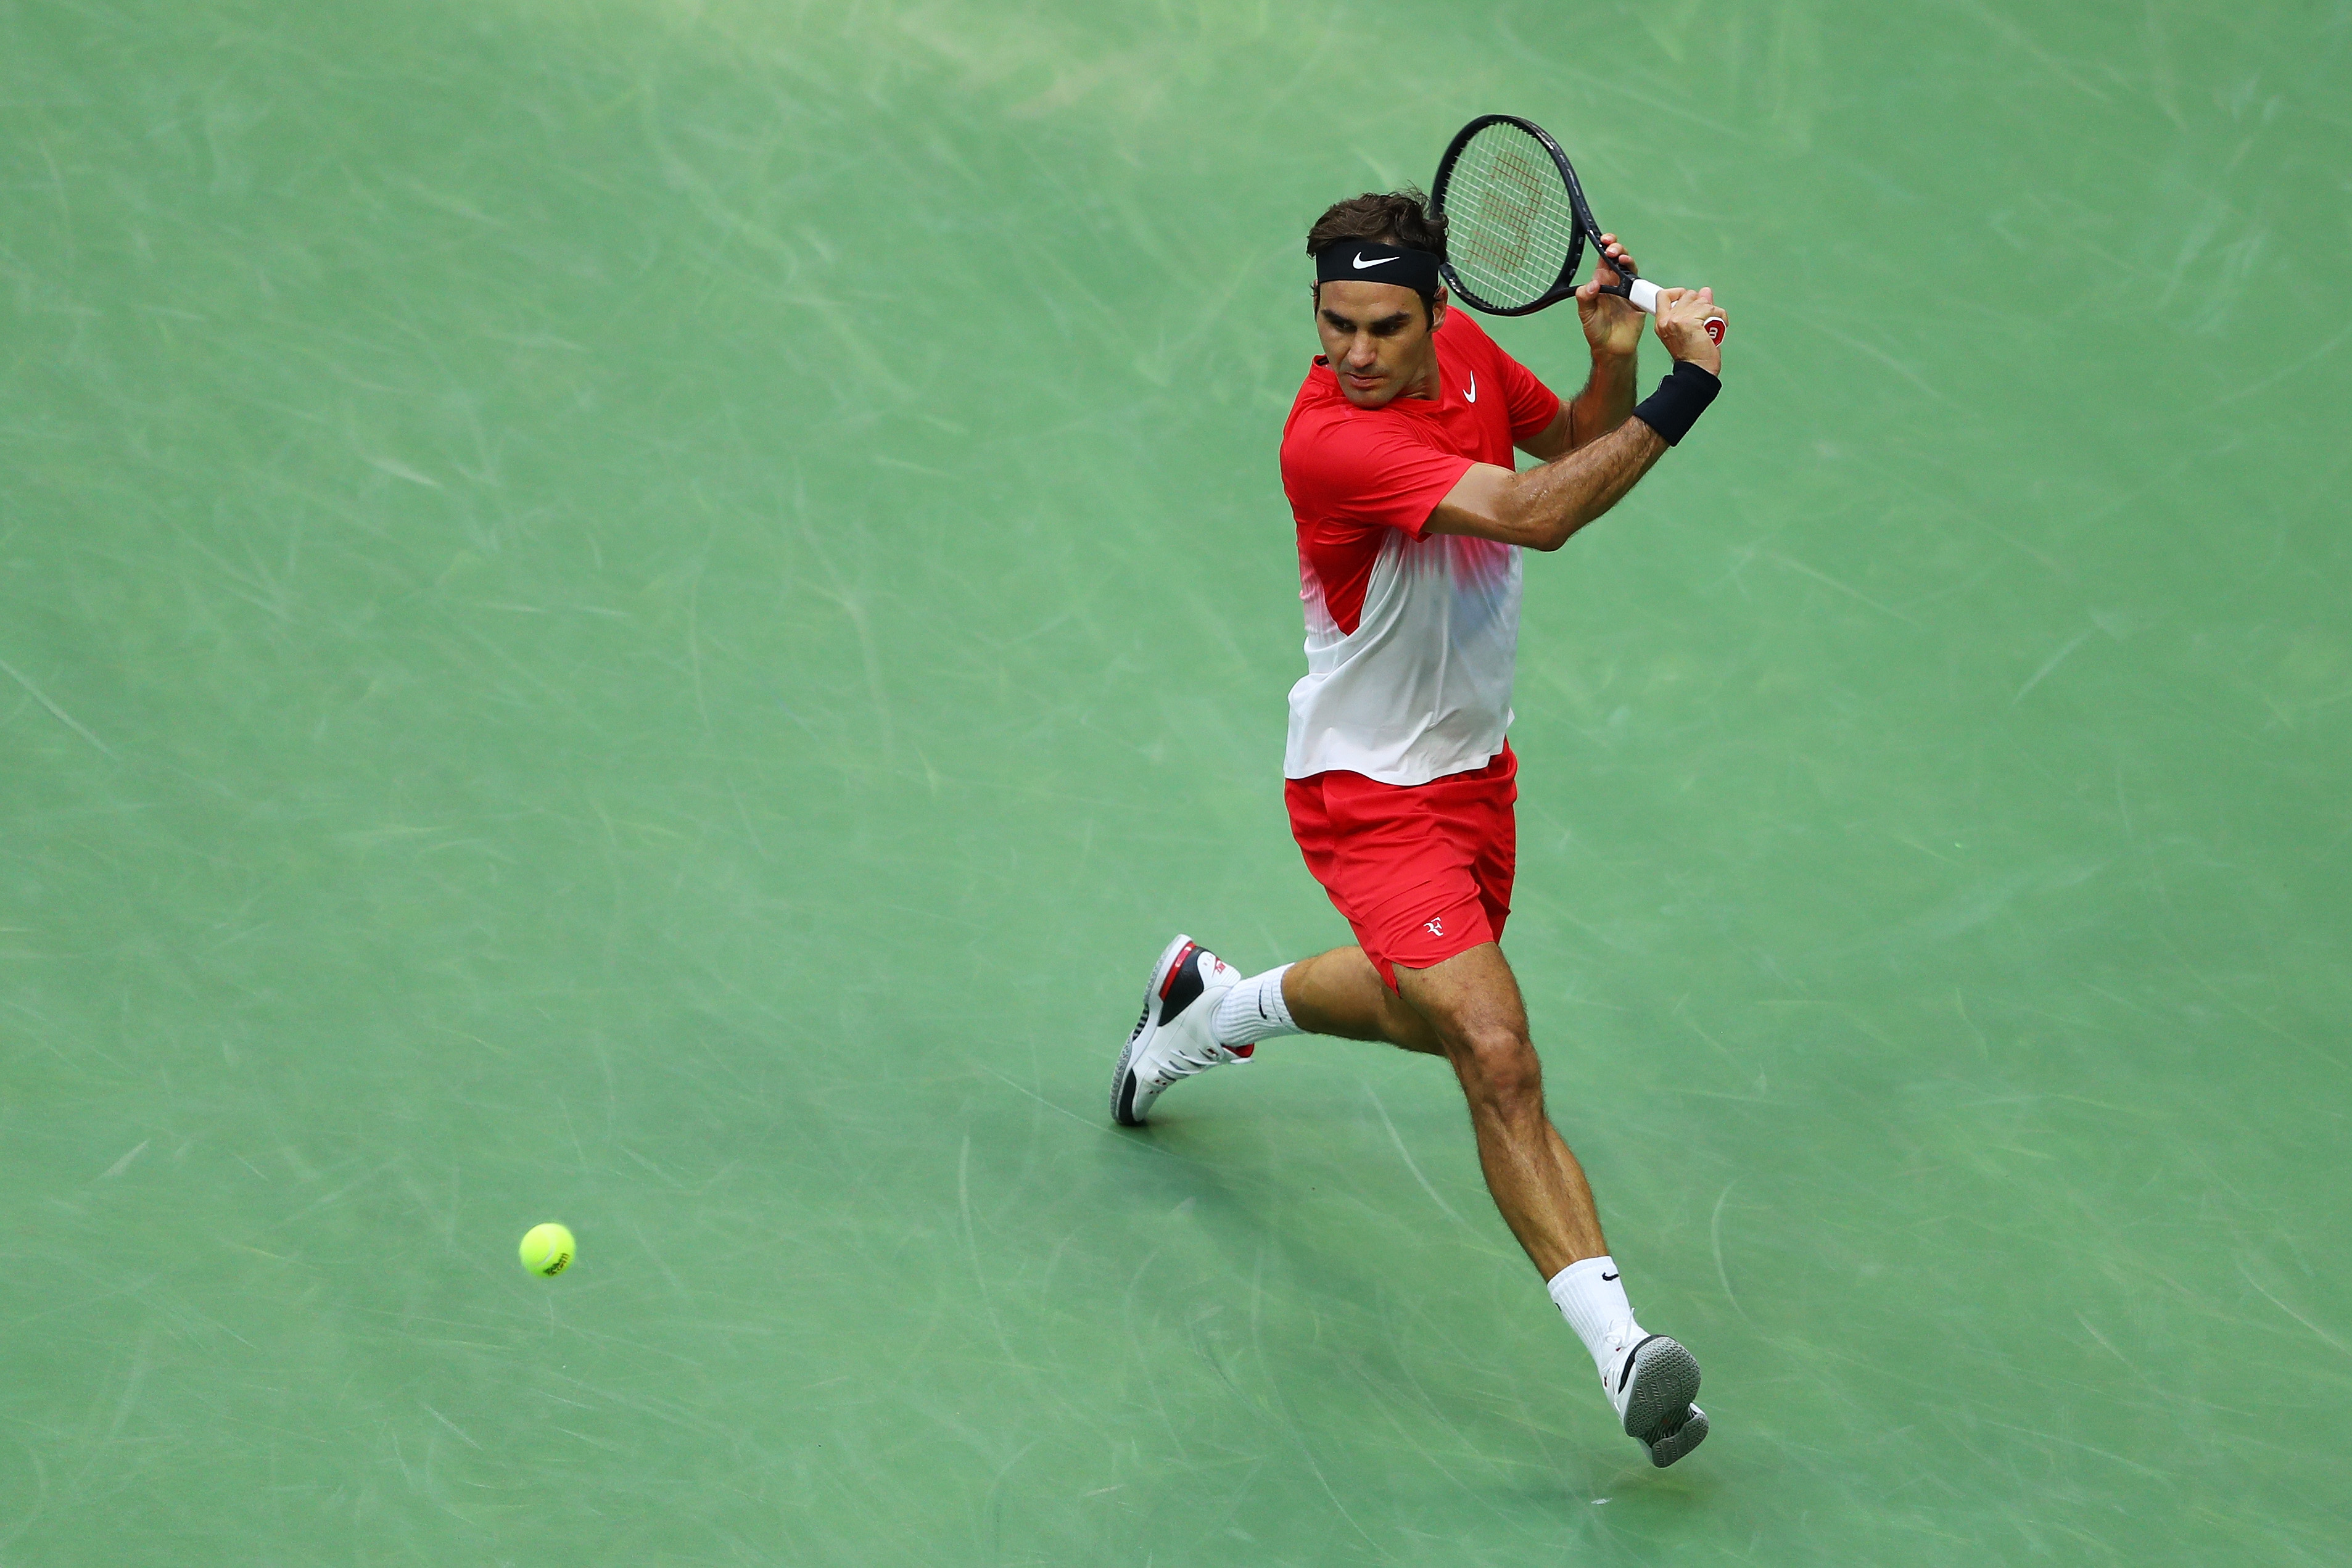 VIDEO | Roger Federer stuns Kei Nishikori by backspinning a tennis ball like ping pong